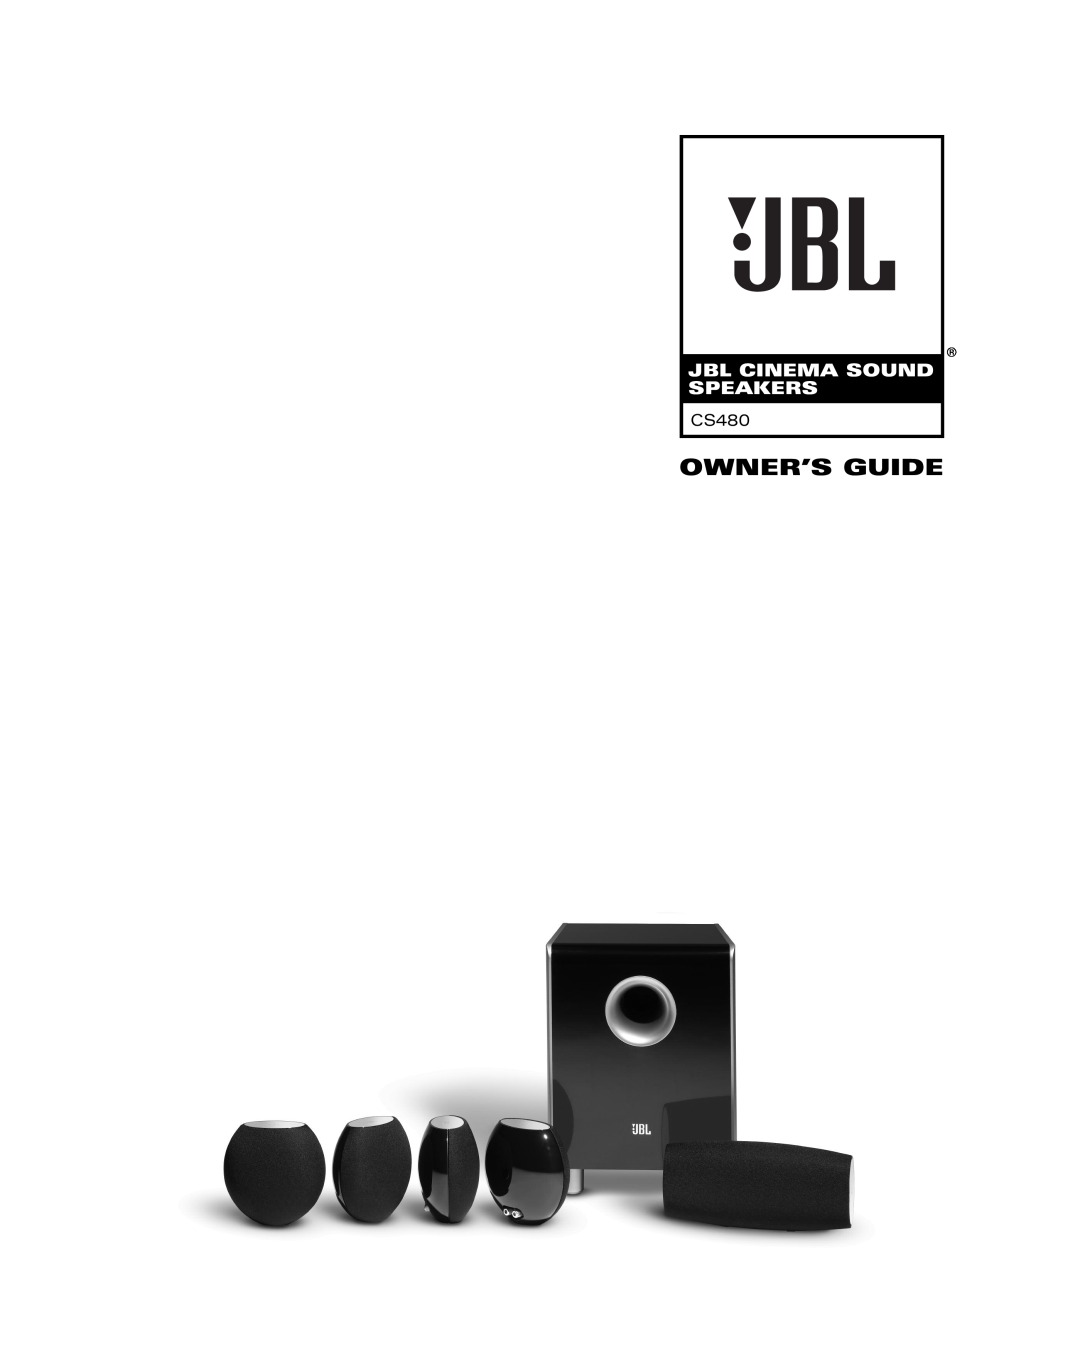 JBL CS480 manual Owner’S Guide, Jbl Cinema Sound Speakers 